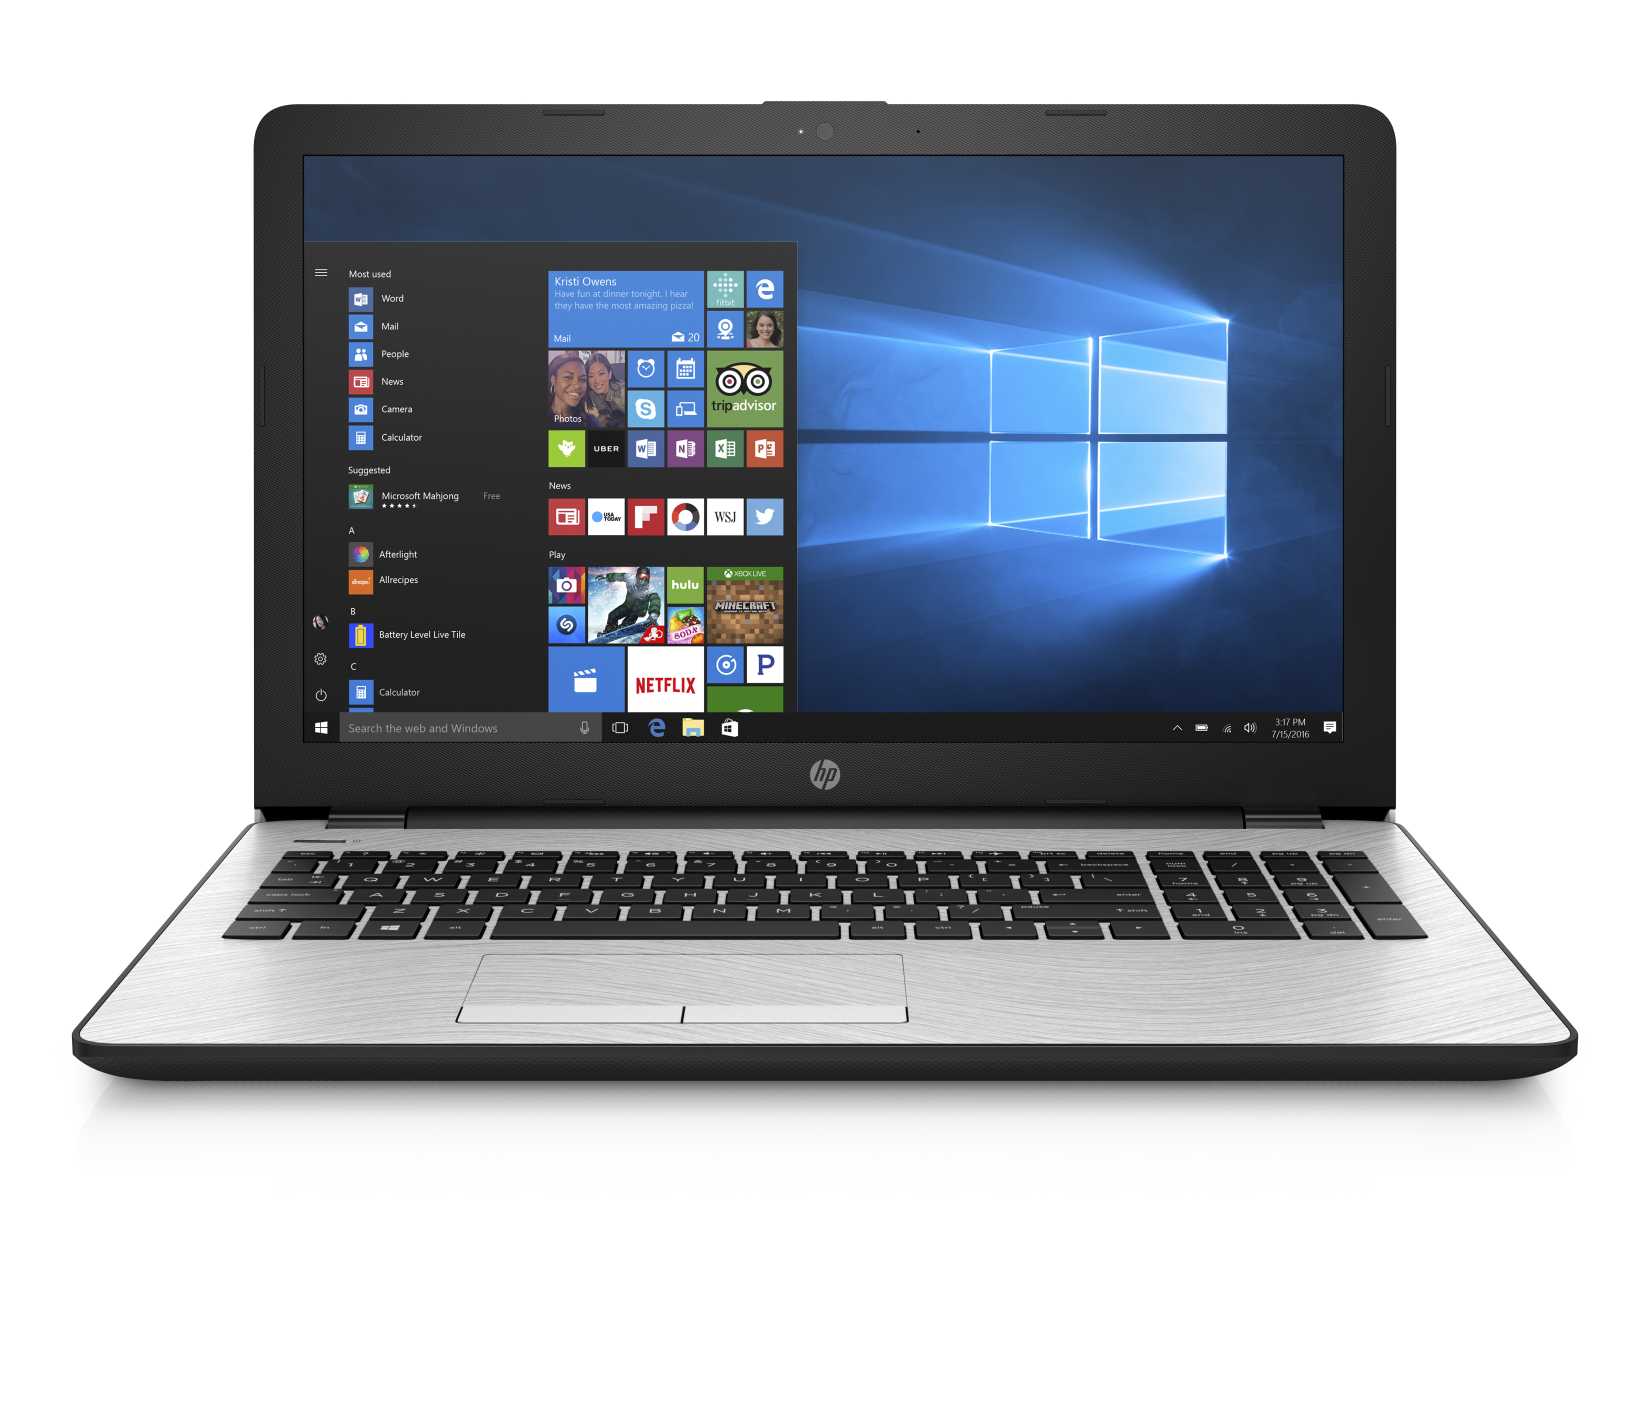 HP Notebook 15 Core i3 -bs031wm